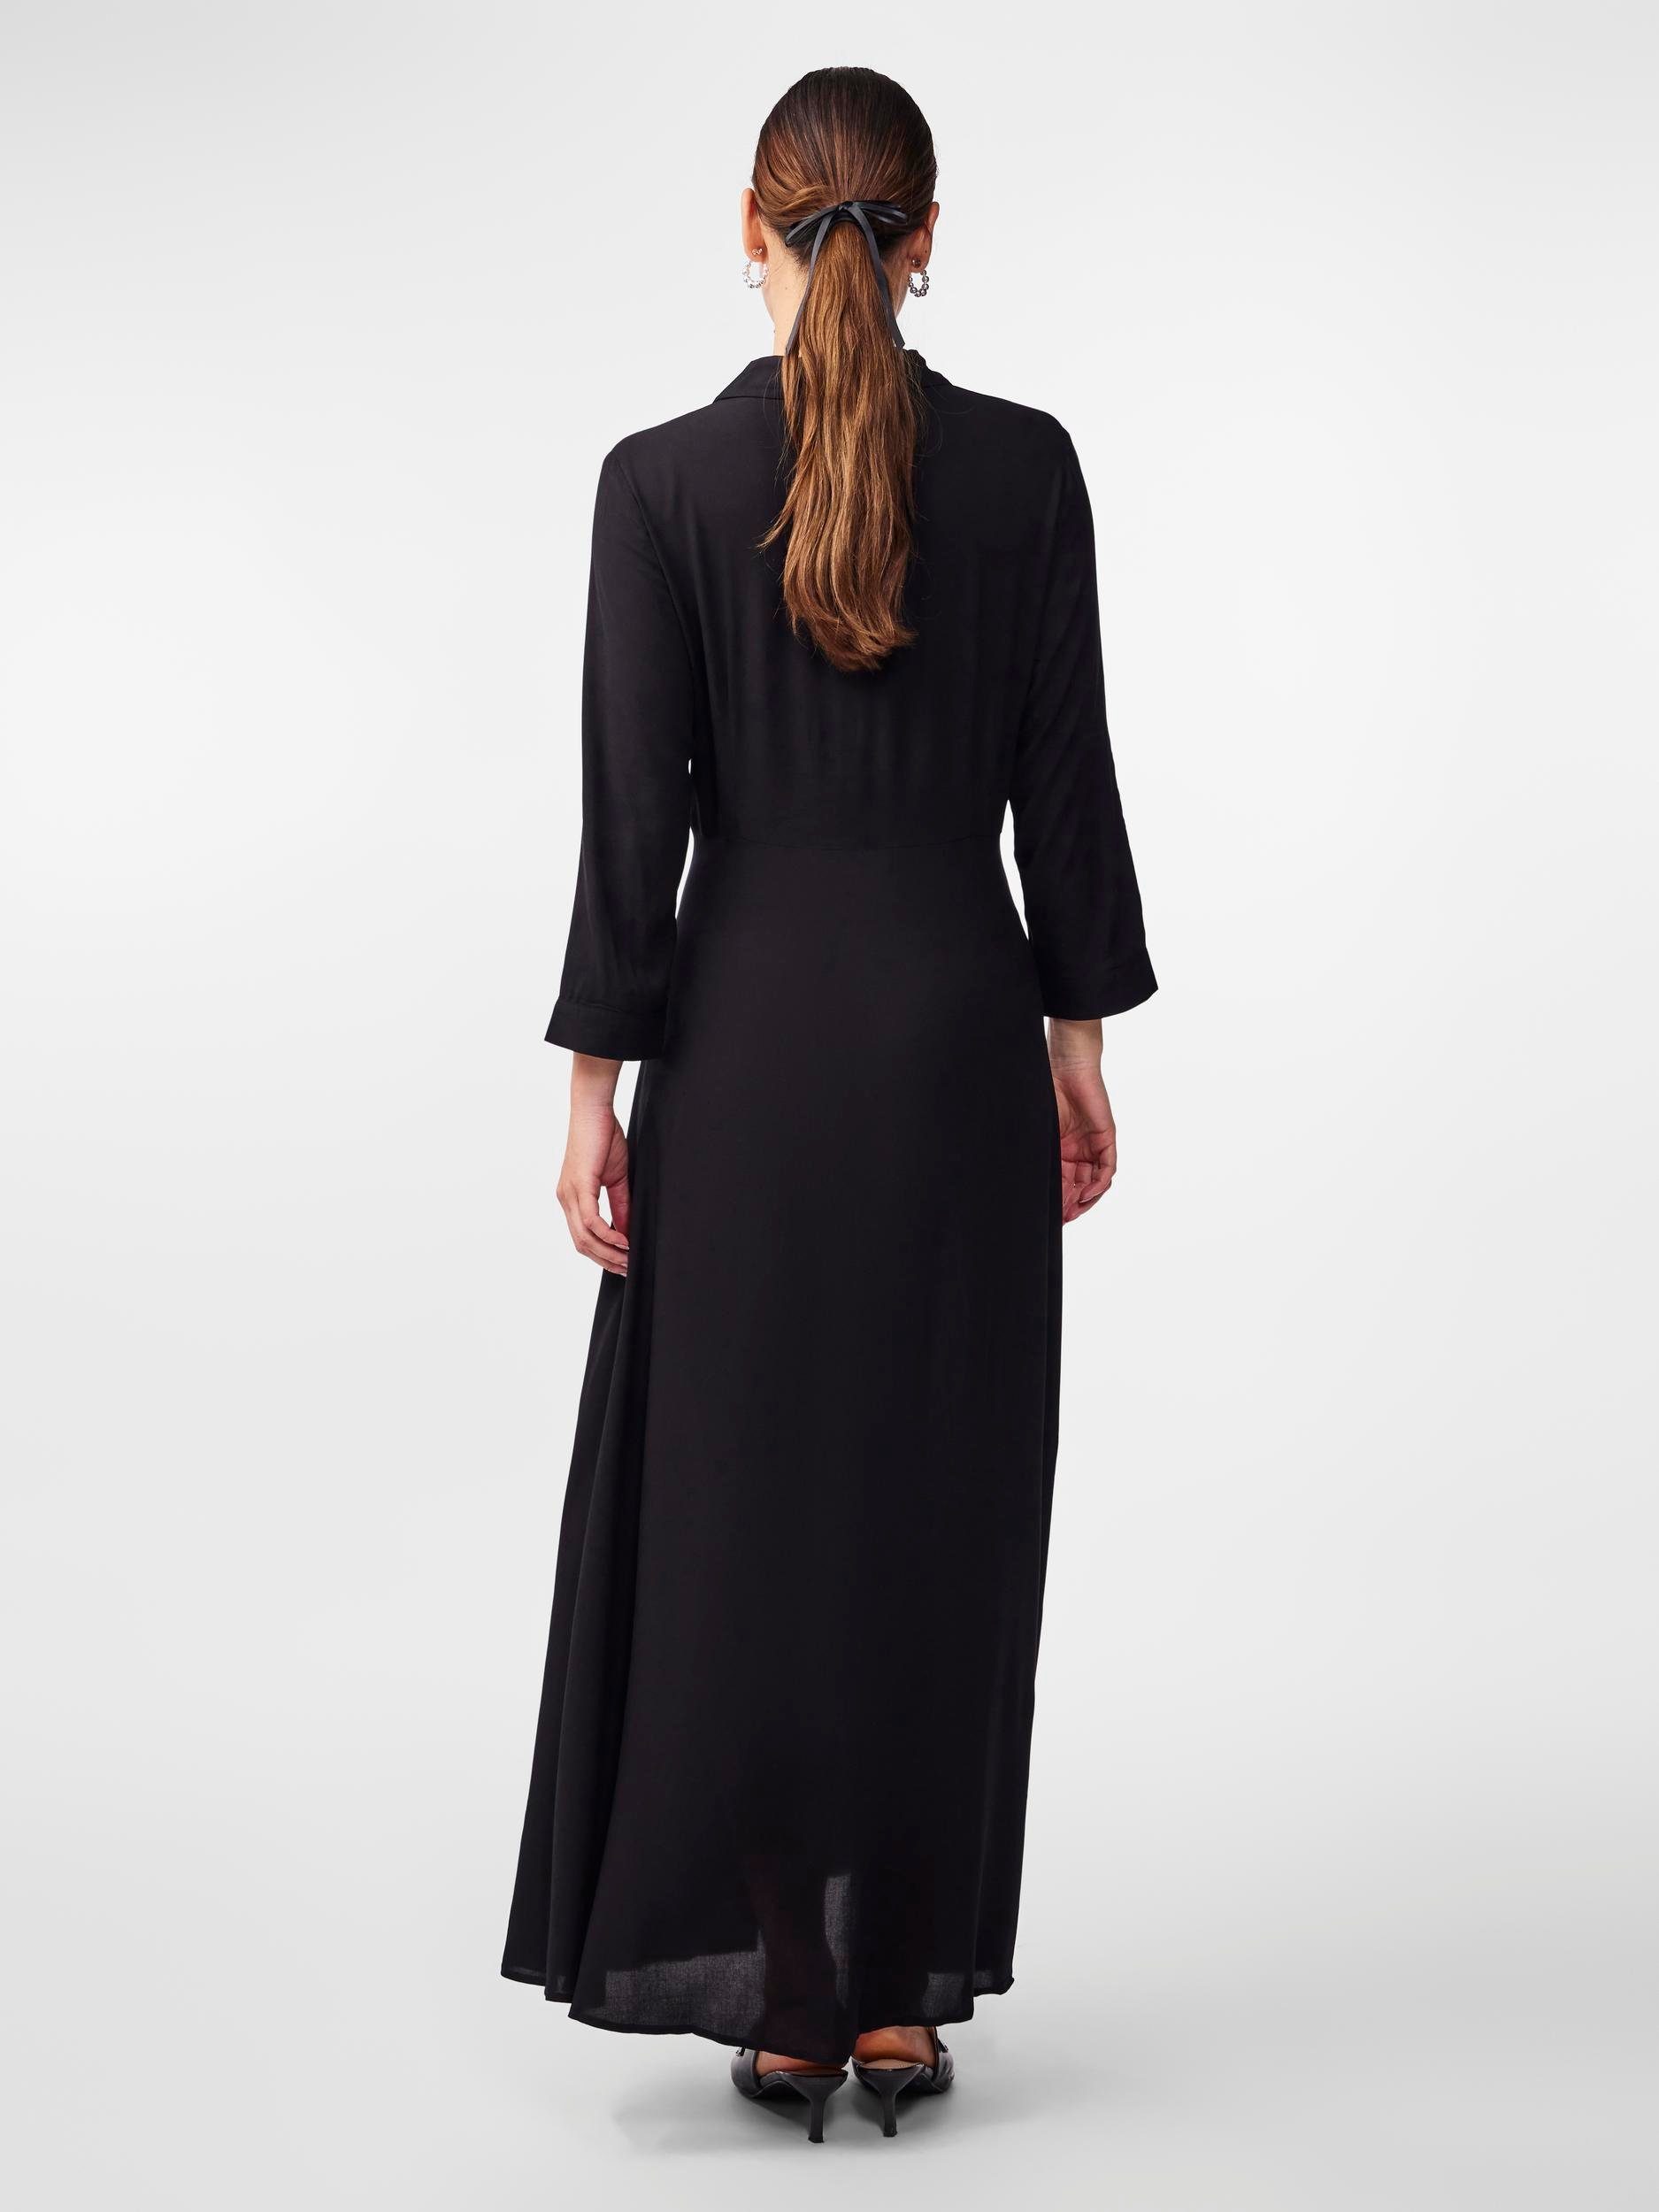 LONG Ärmel DRESS SHIRT Black Y.A.S 3/4 YASSAVANNA Hemdblusenkleid mit